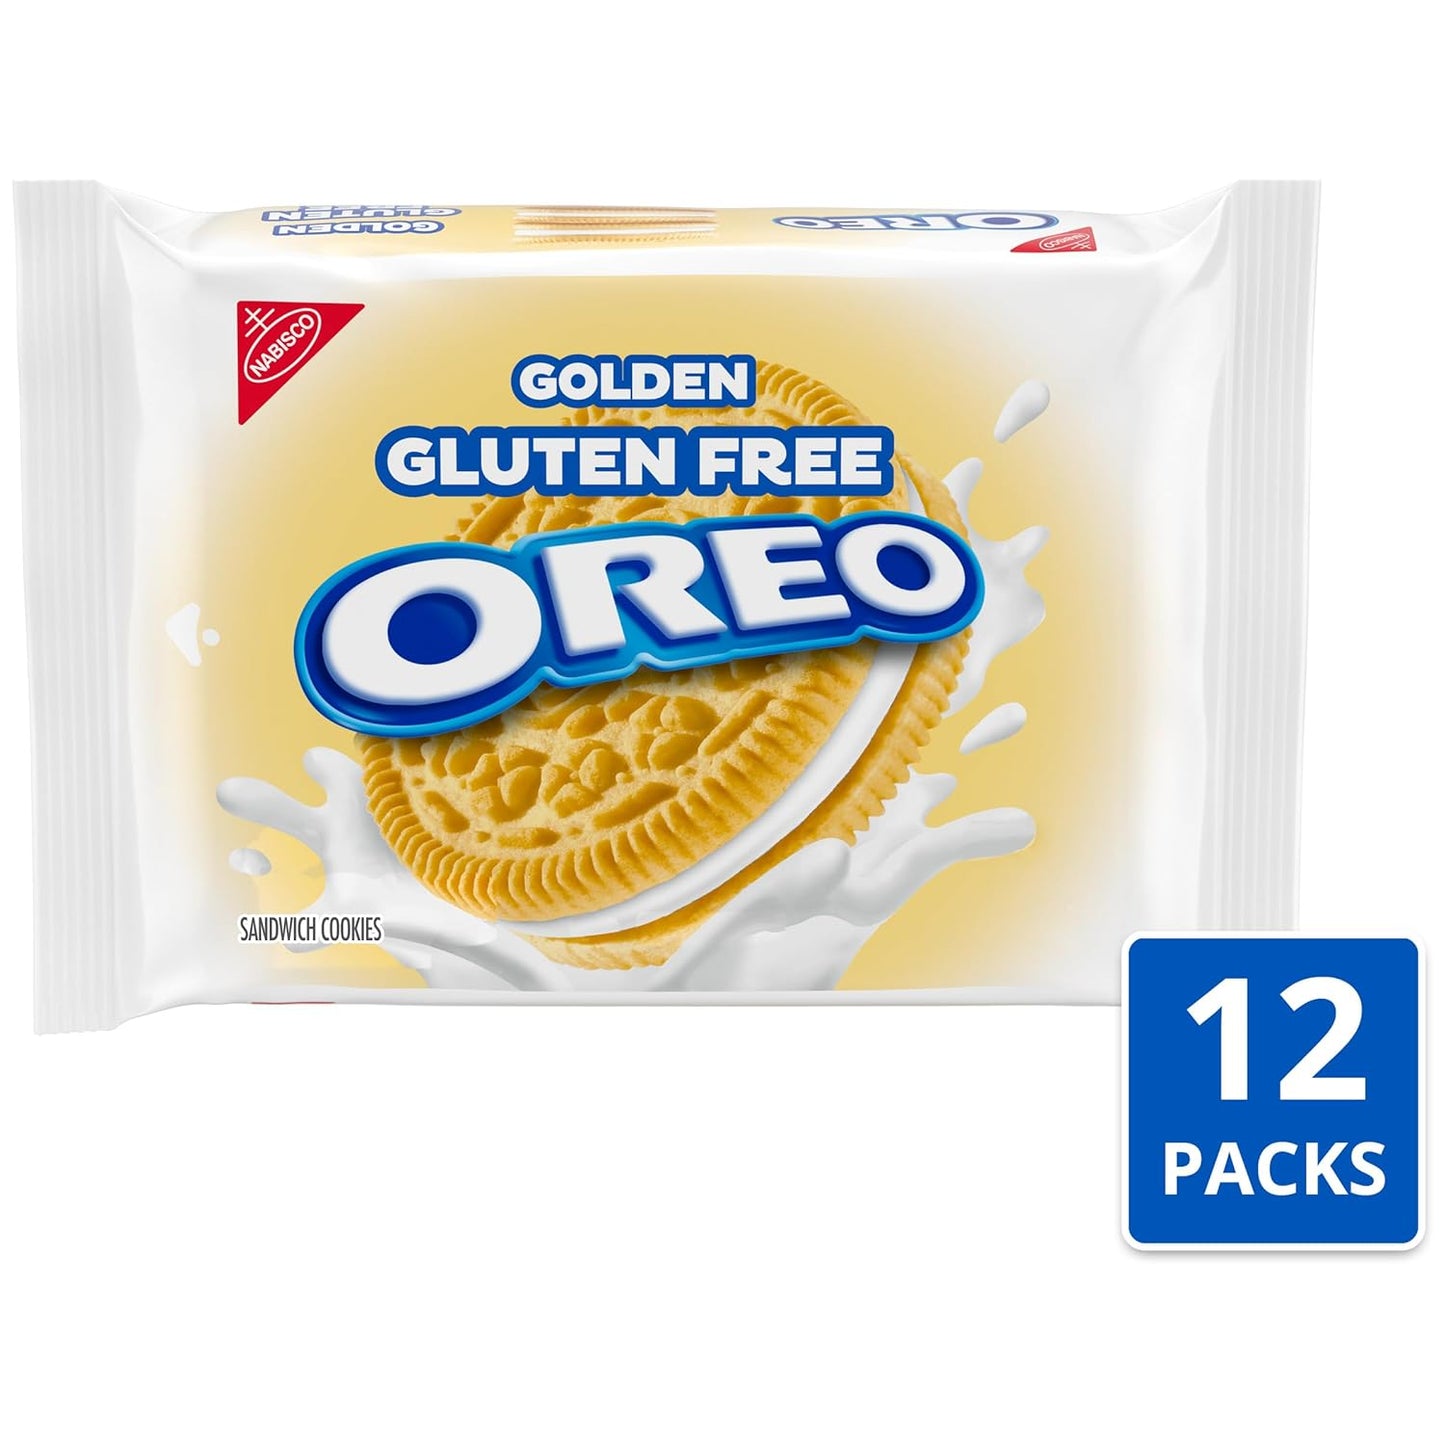 OREO Gluten Free Golden Sandwich Cookies, Gluten Free Cookies, 12-12.08 oz Packs - RARE